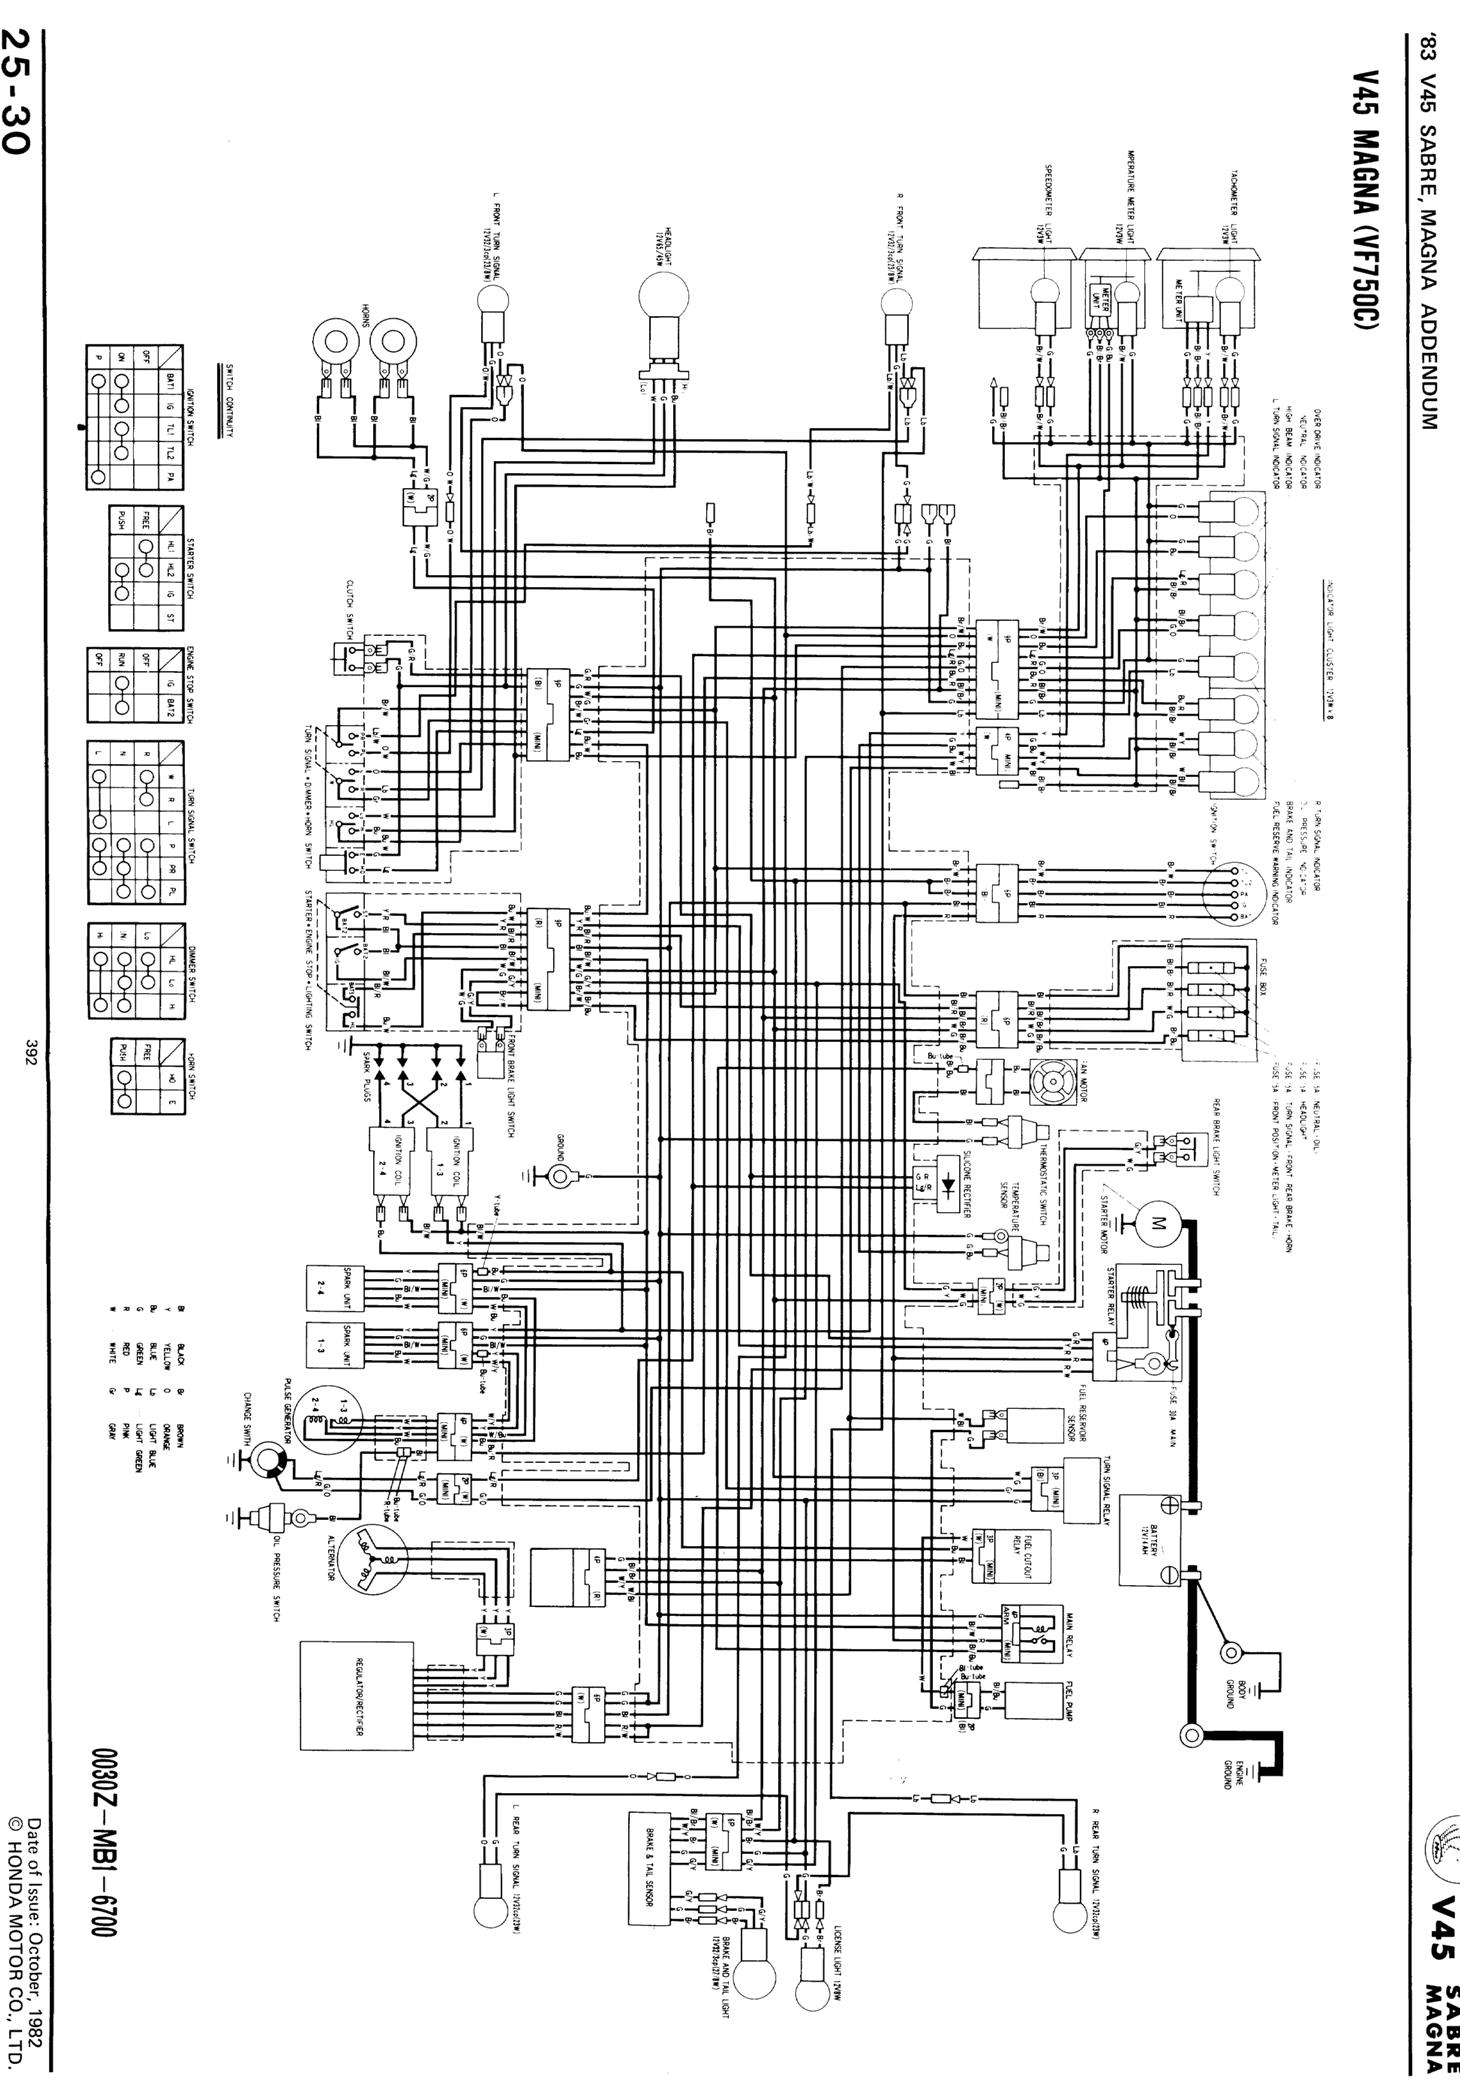 1982 Honda magna wiring diagram #3